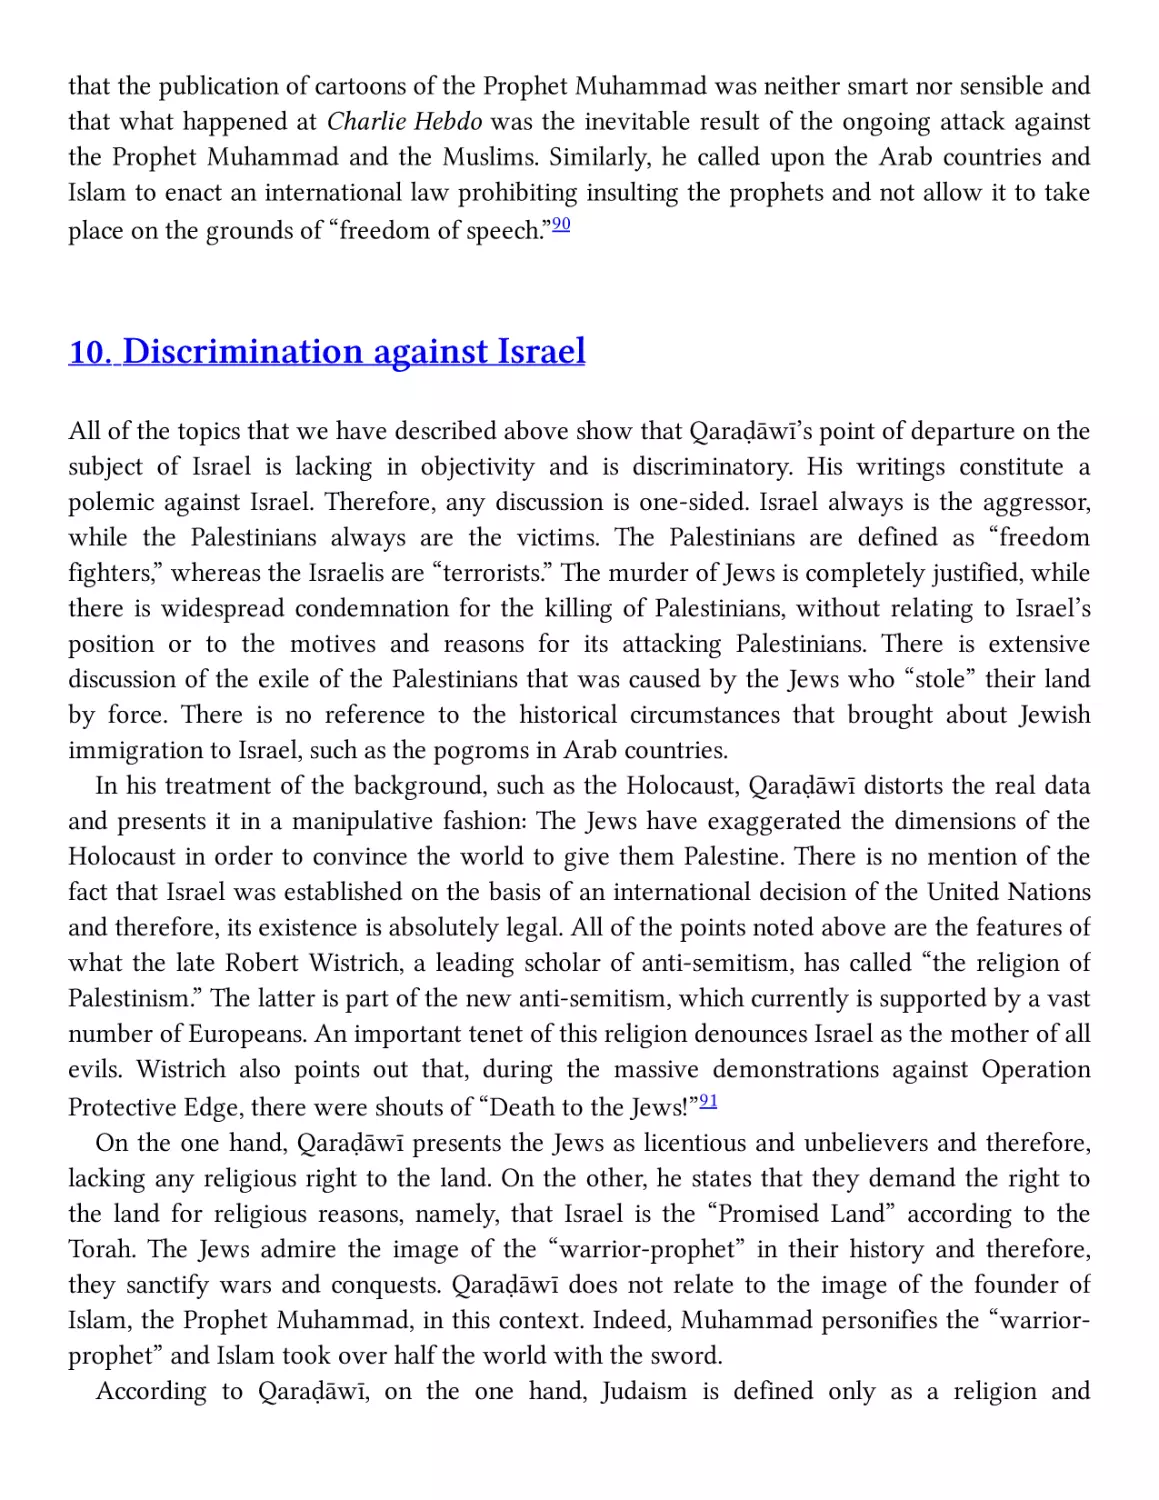 10. Discrimination against Israel